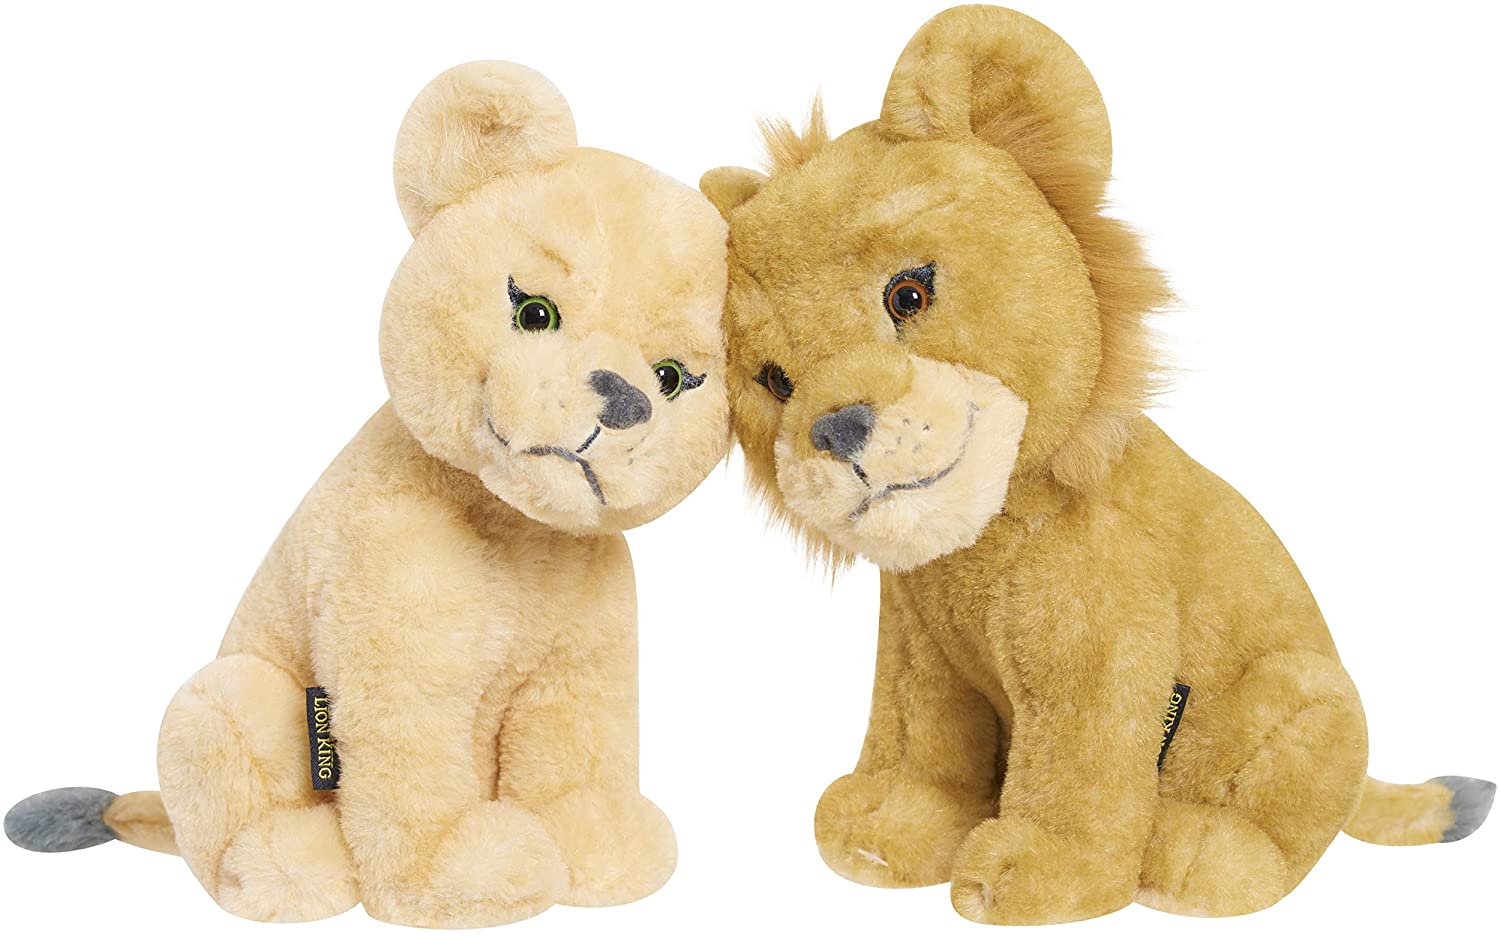 Disney's The Lion King Nuzzling Simba & Nala Plush $10.71 + Free Shipping w/ Amazon Prime or Orders $25+